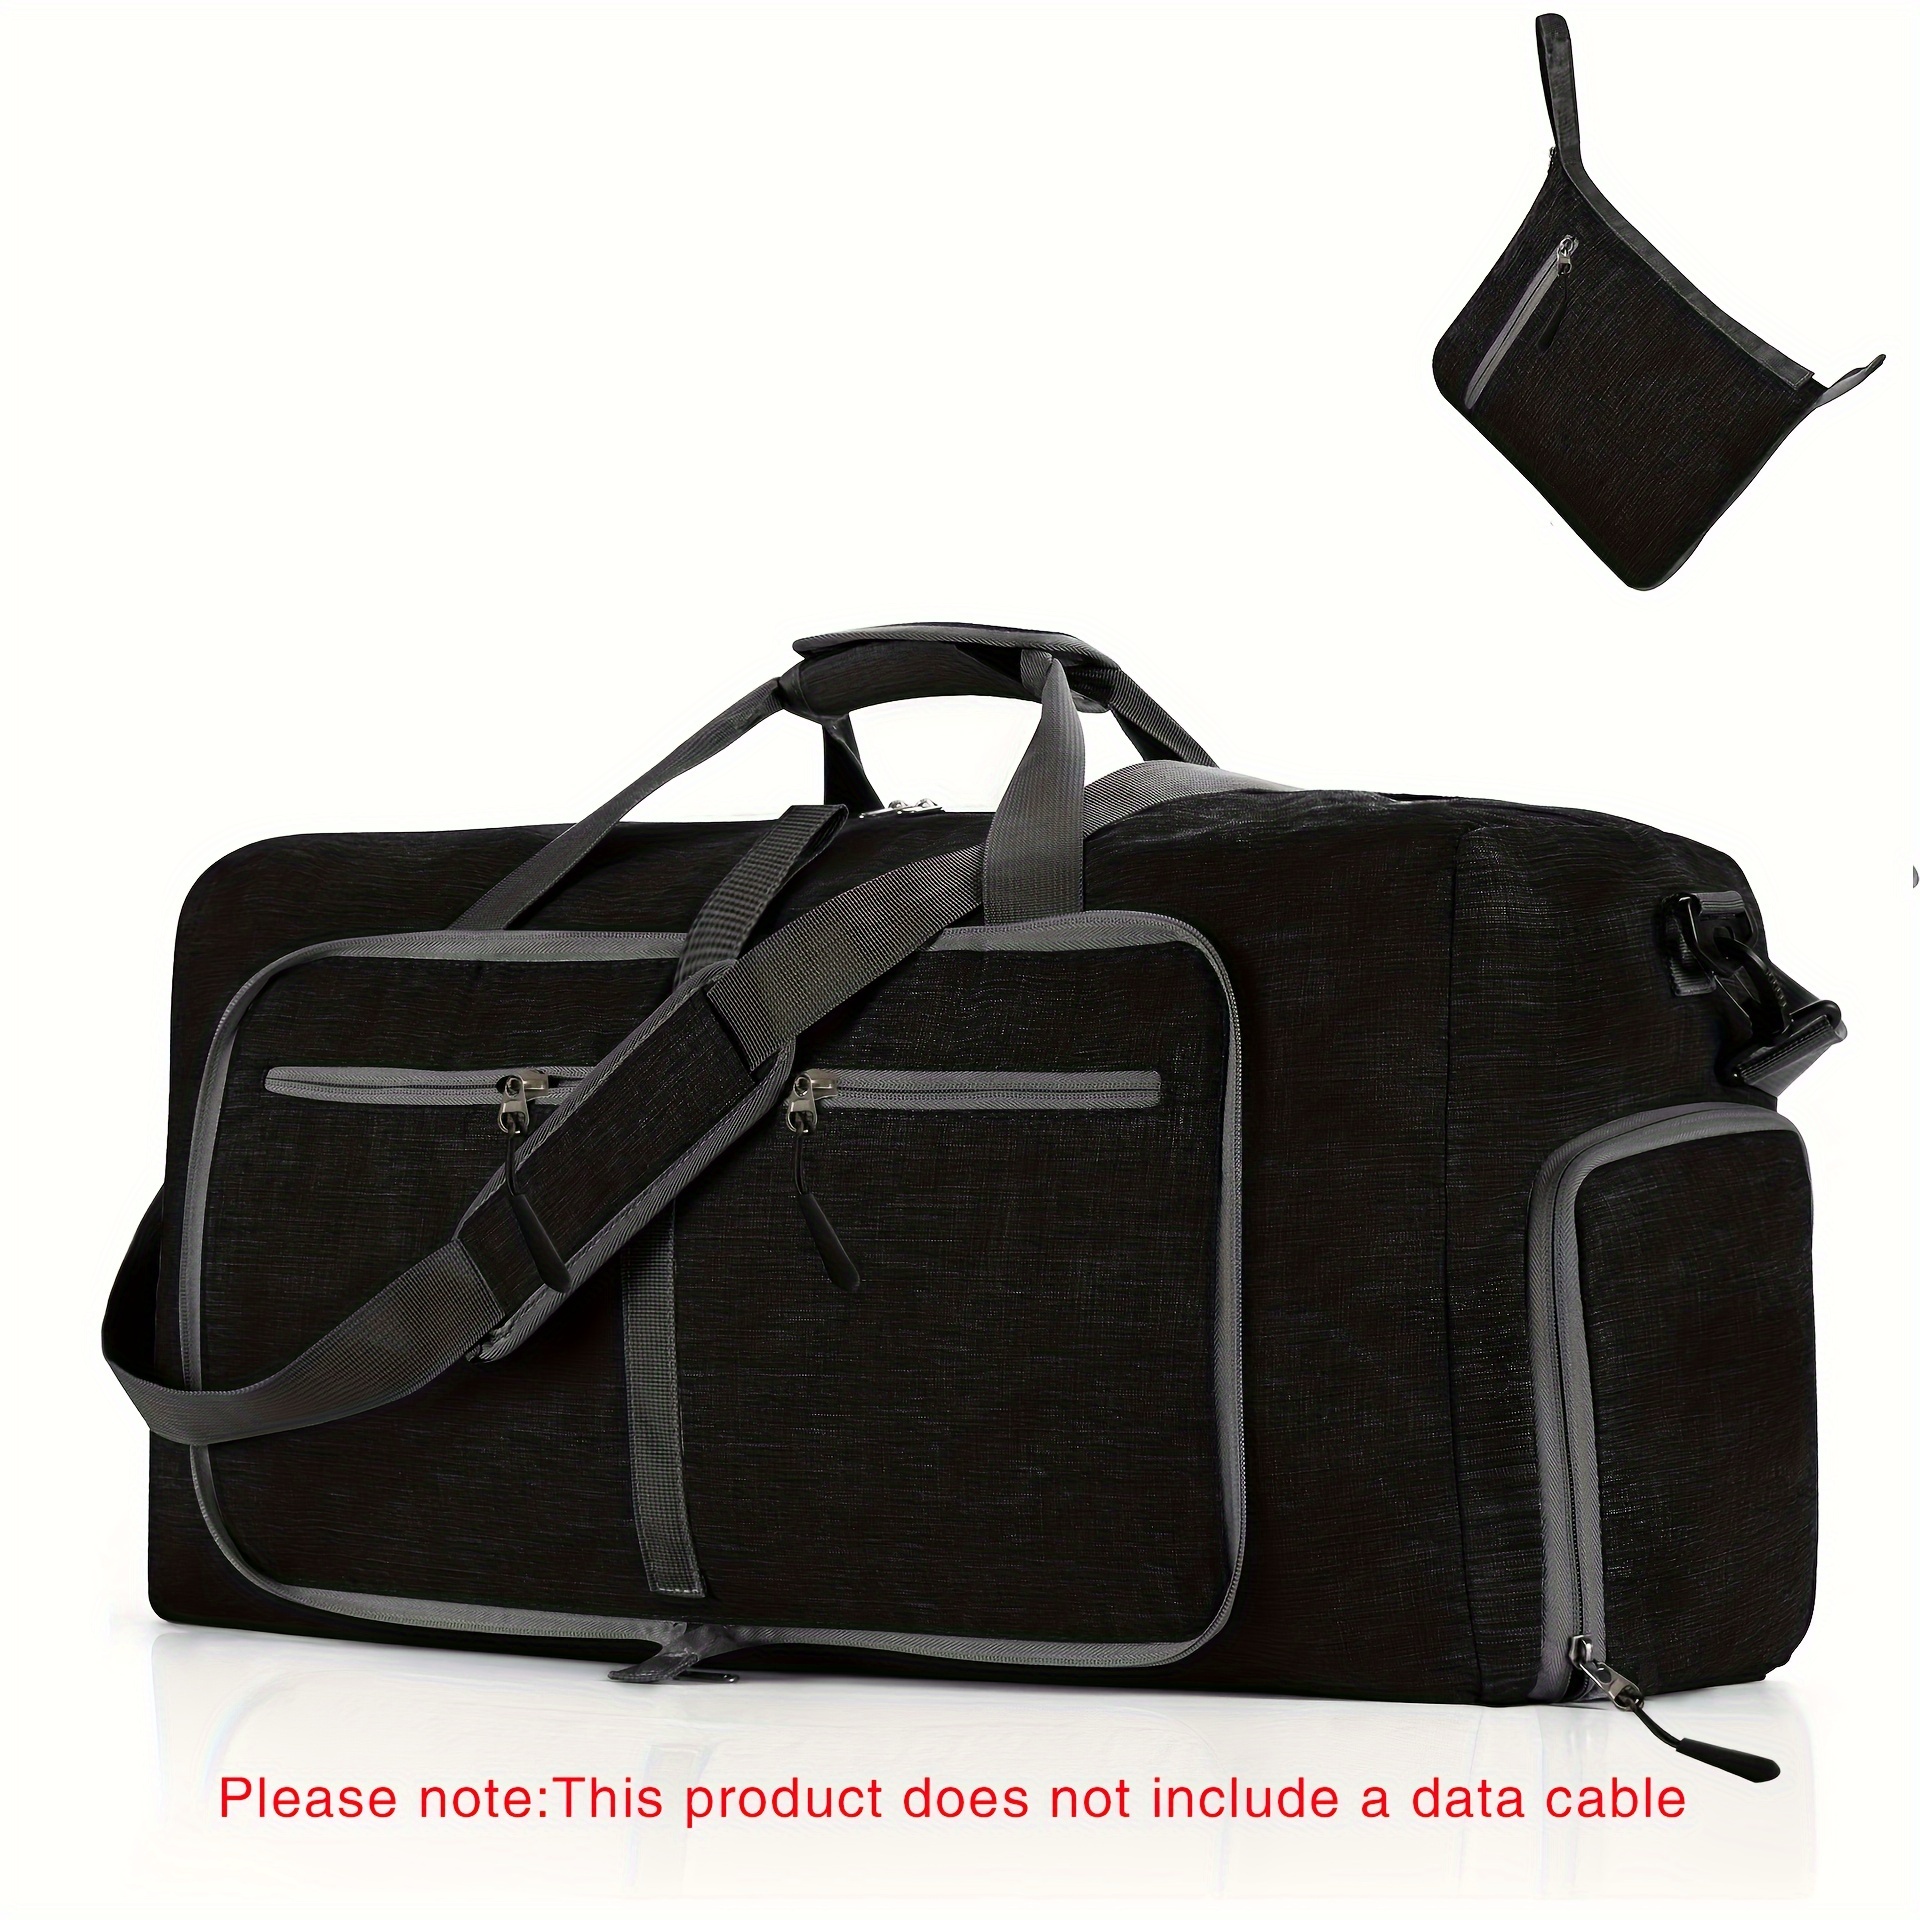 

Portable Large Capacity Handbag, Foldable Solid Color Shoulder Bag, Perfect Travel Duffel Bag For Trip